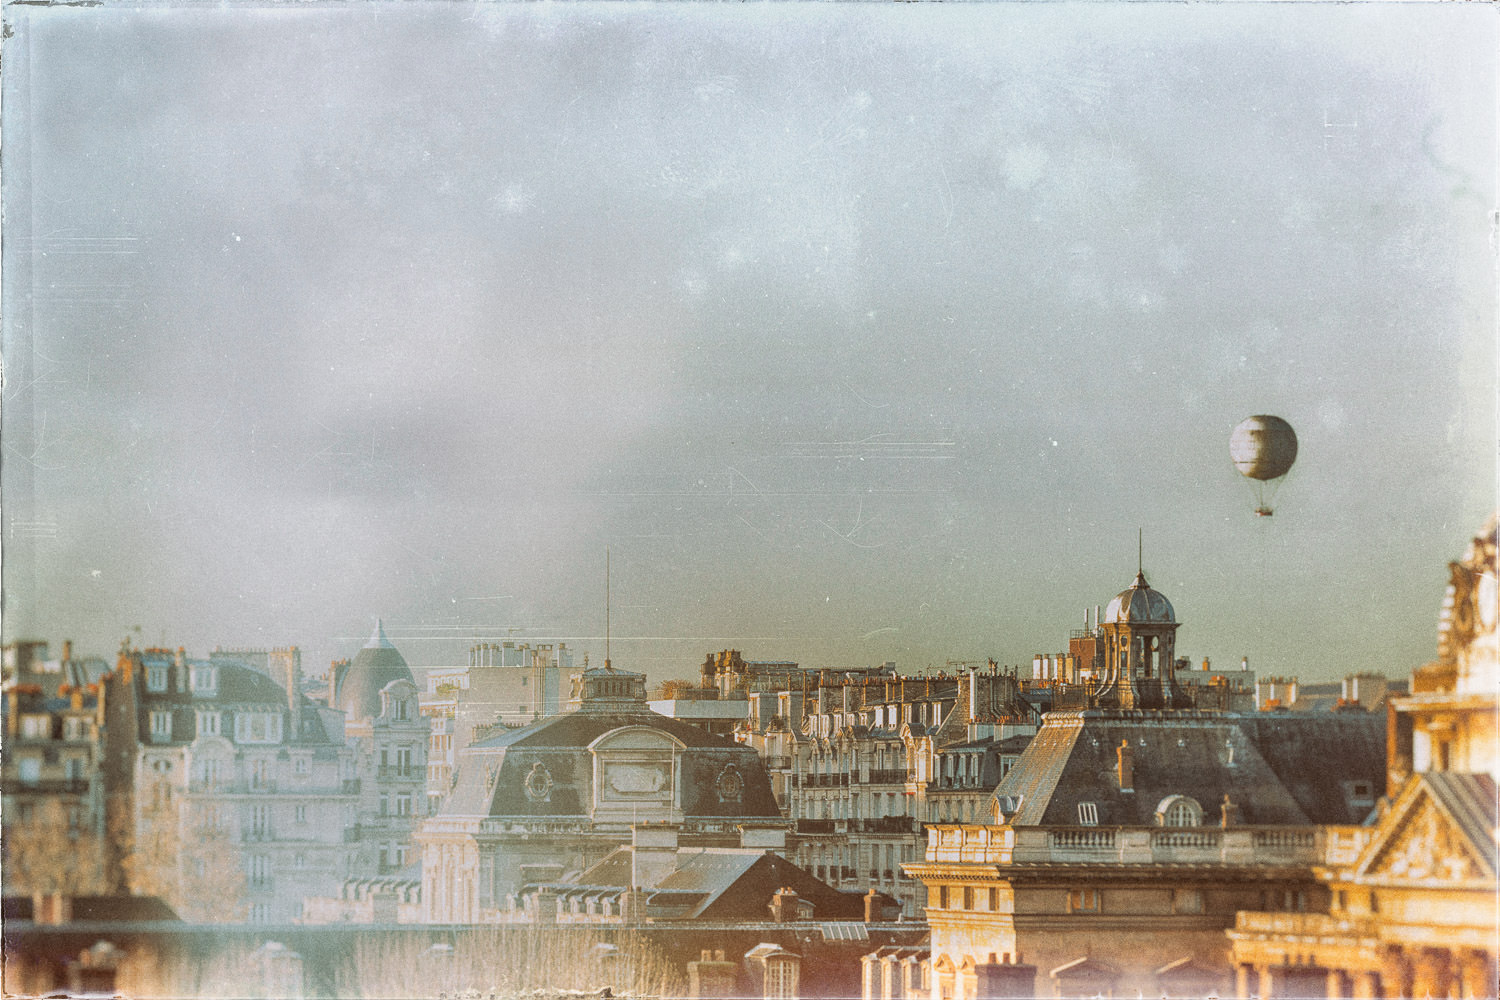 Paris - For Charles - France, Paris, balloon, morning, vintage, art, fine art